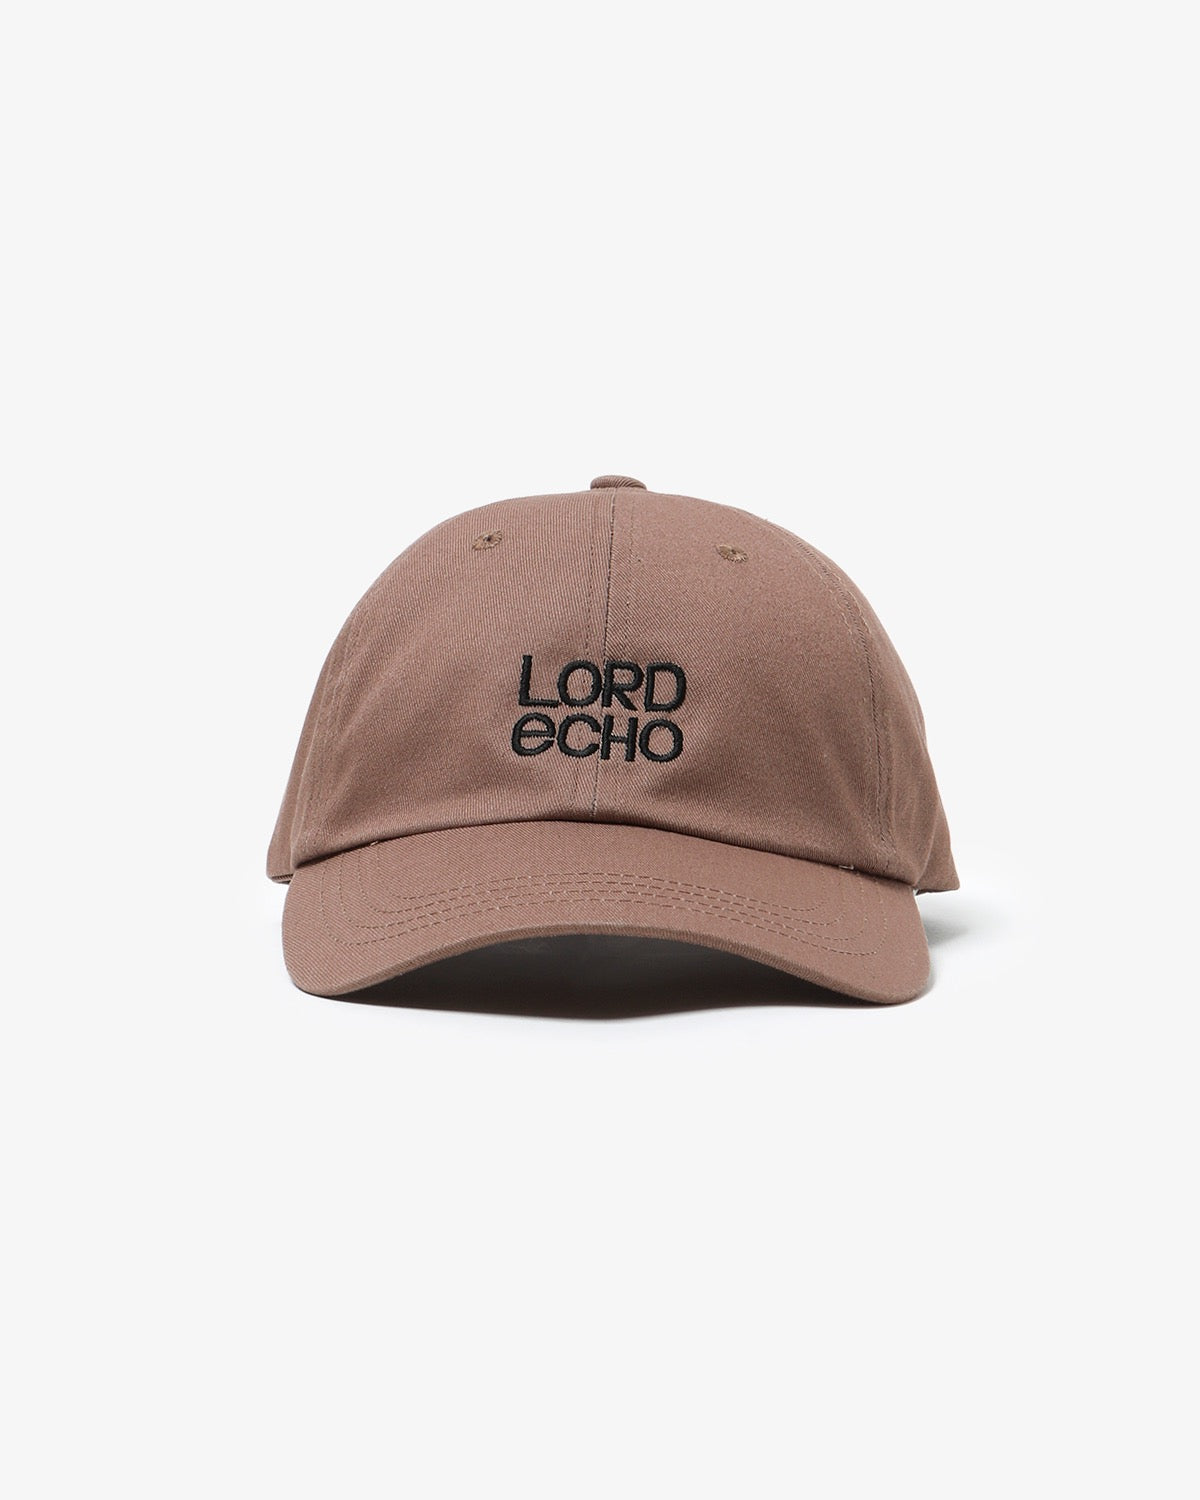 LORD ECHO CAP